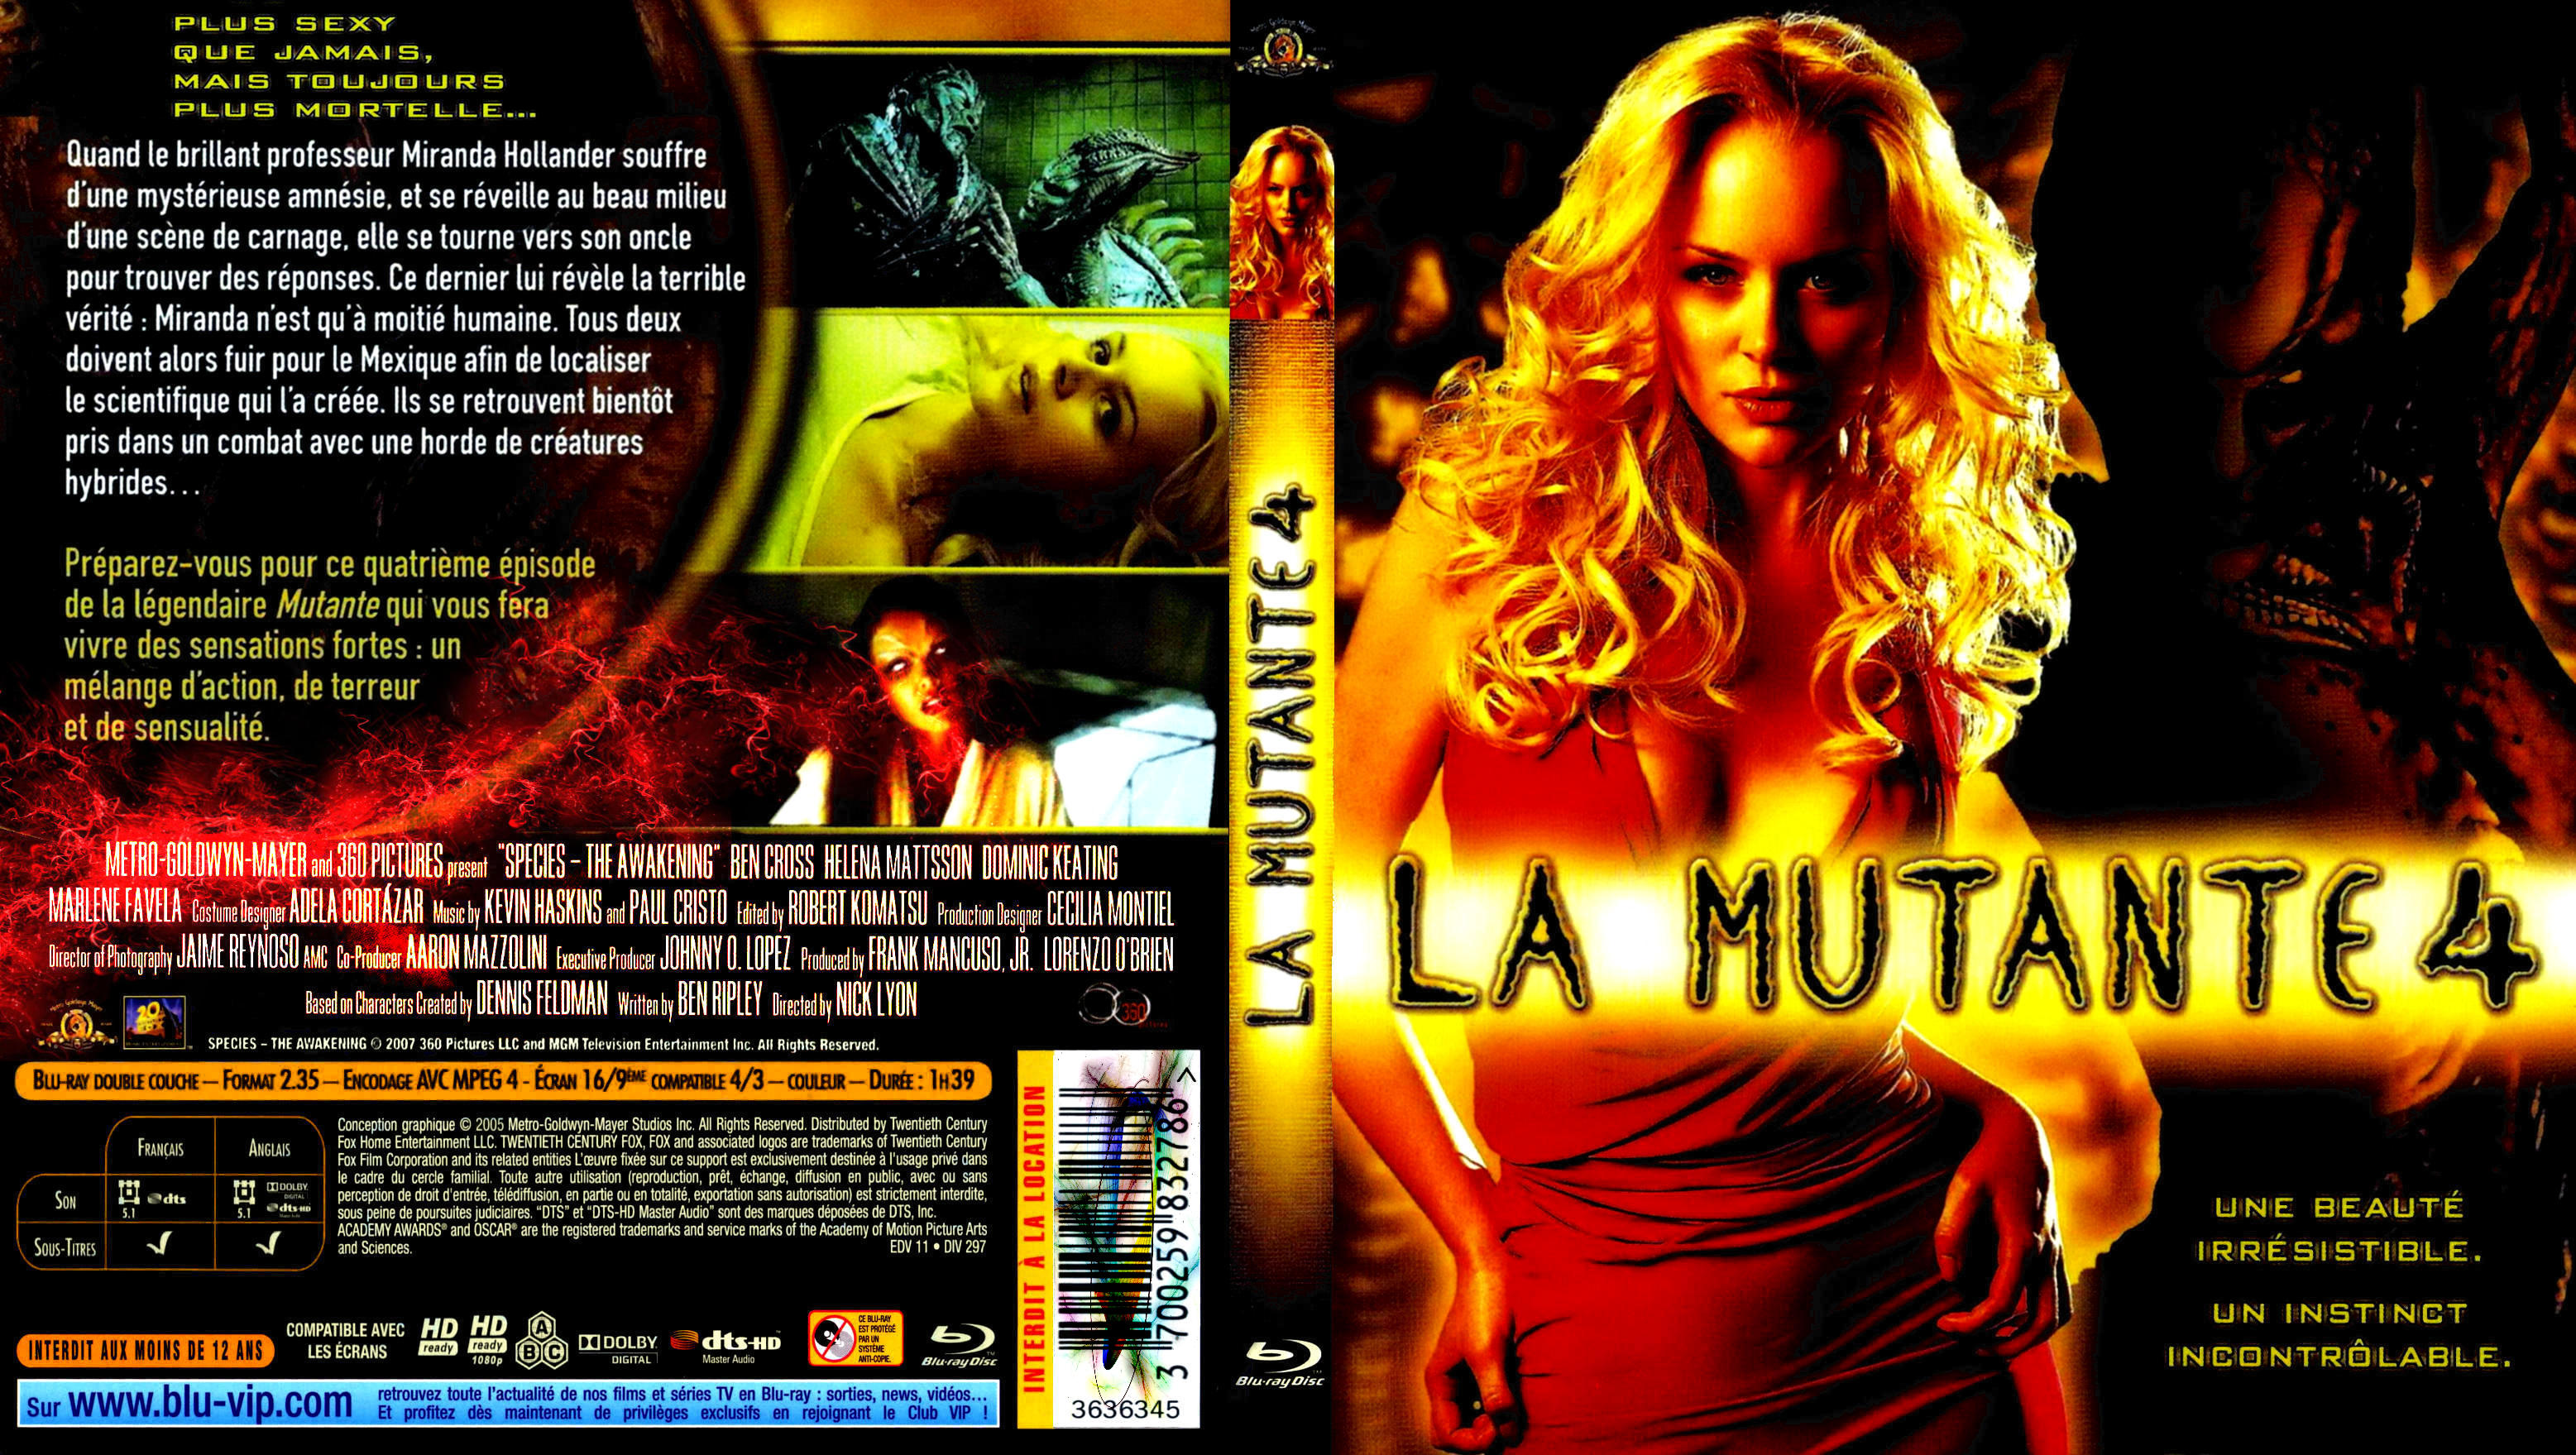 Jaquette DVD La mutante 4 custom (BLU-RAY)